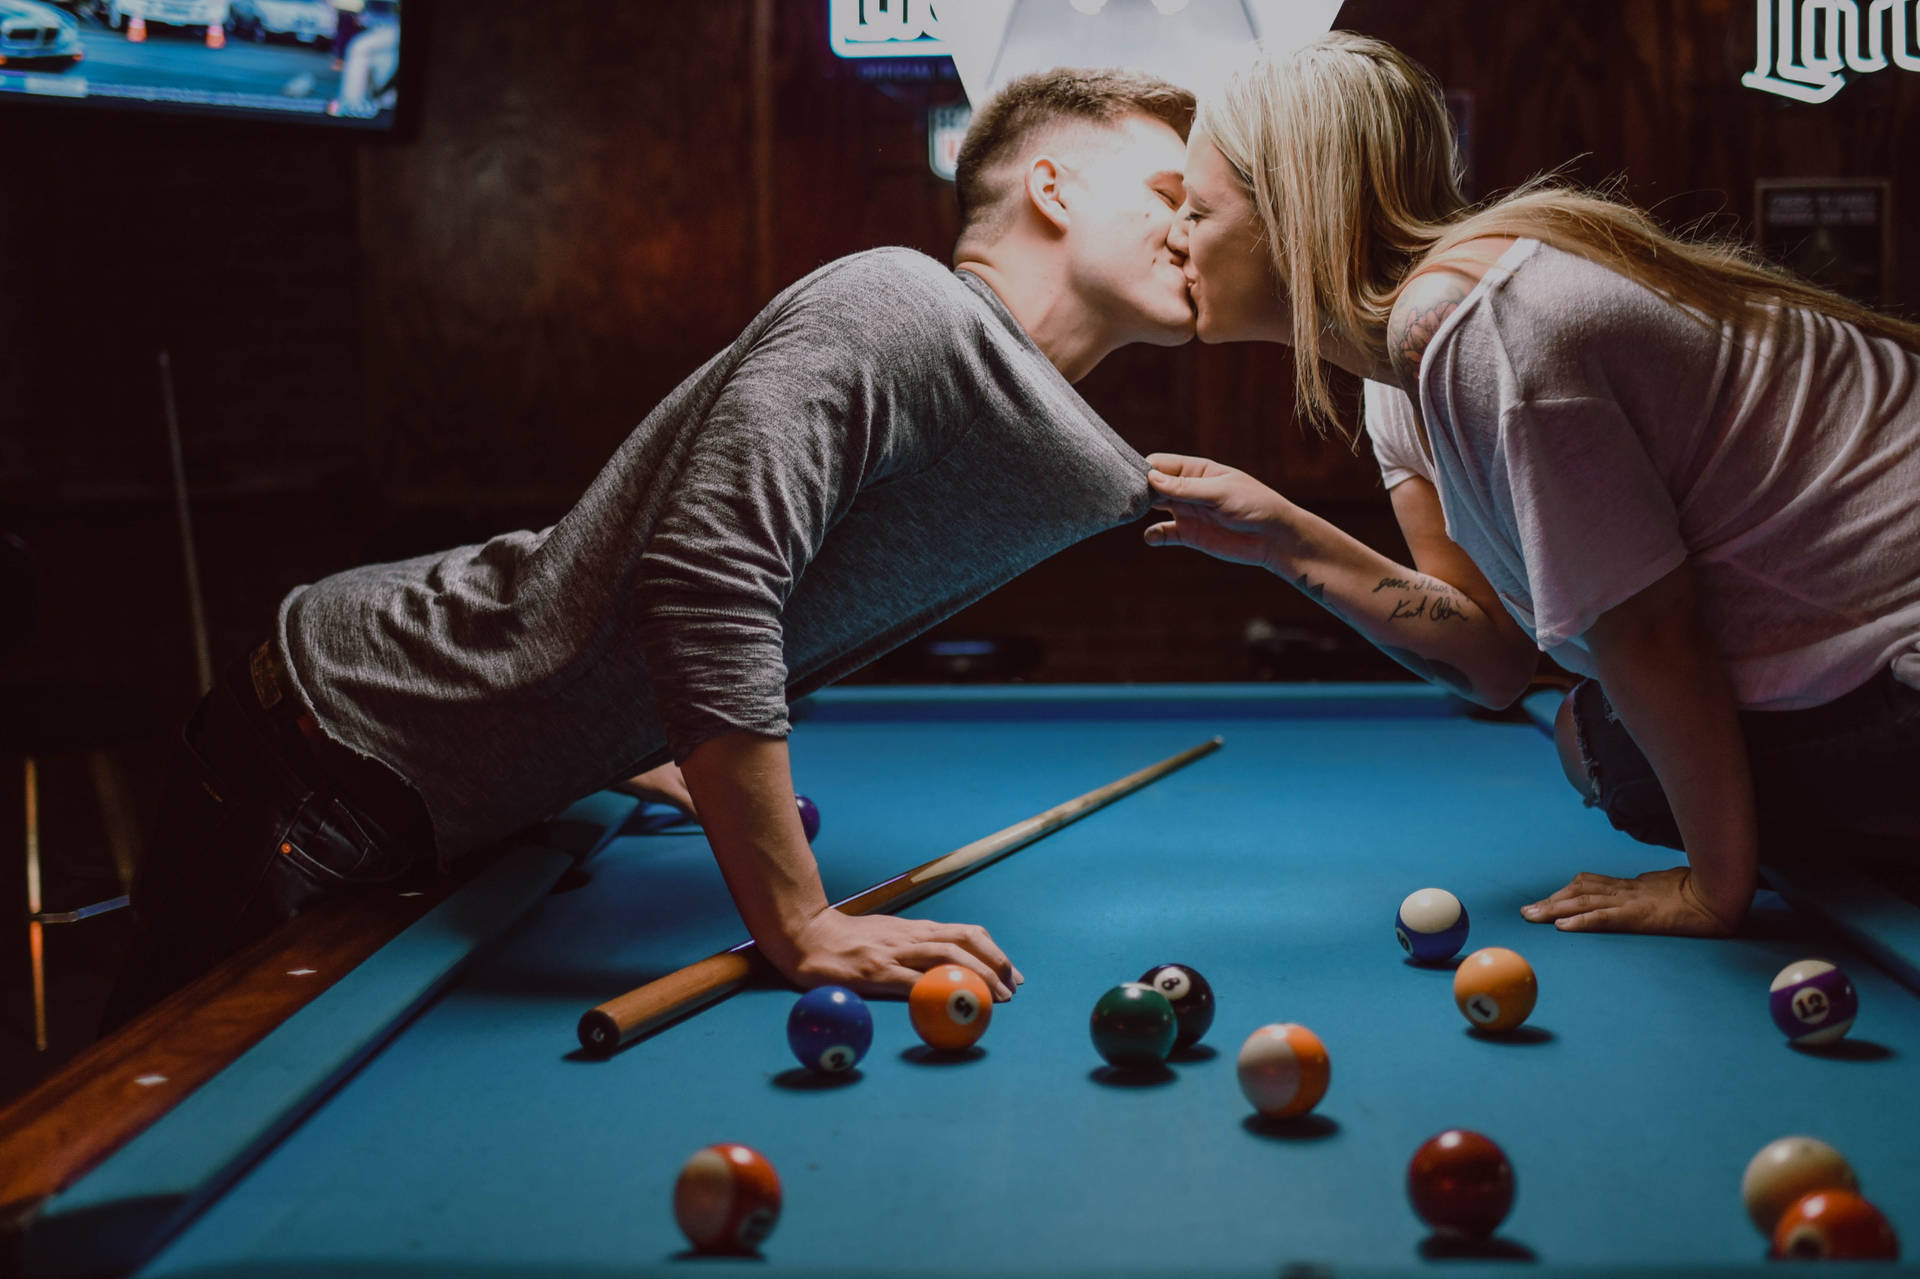 Couple Kissing On Billiard Table